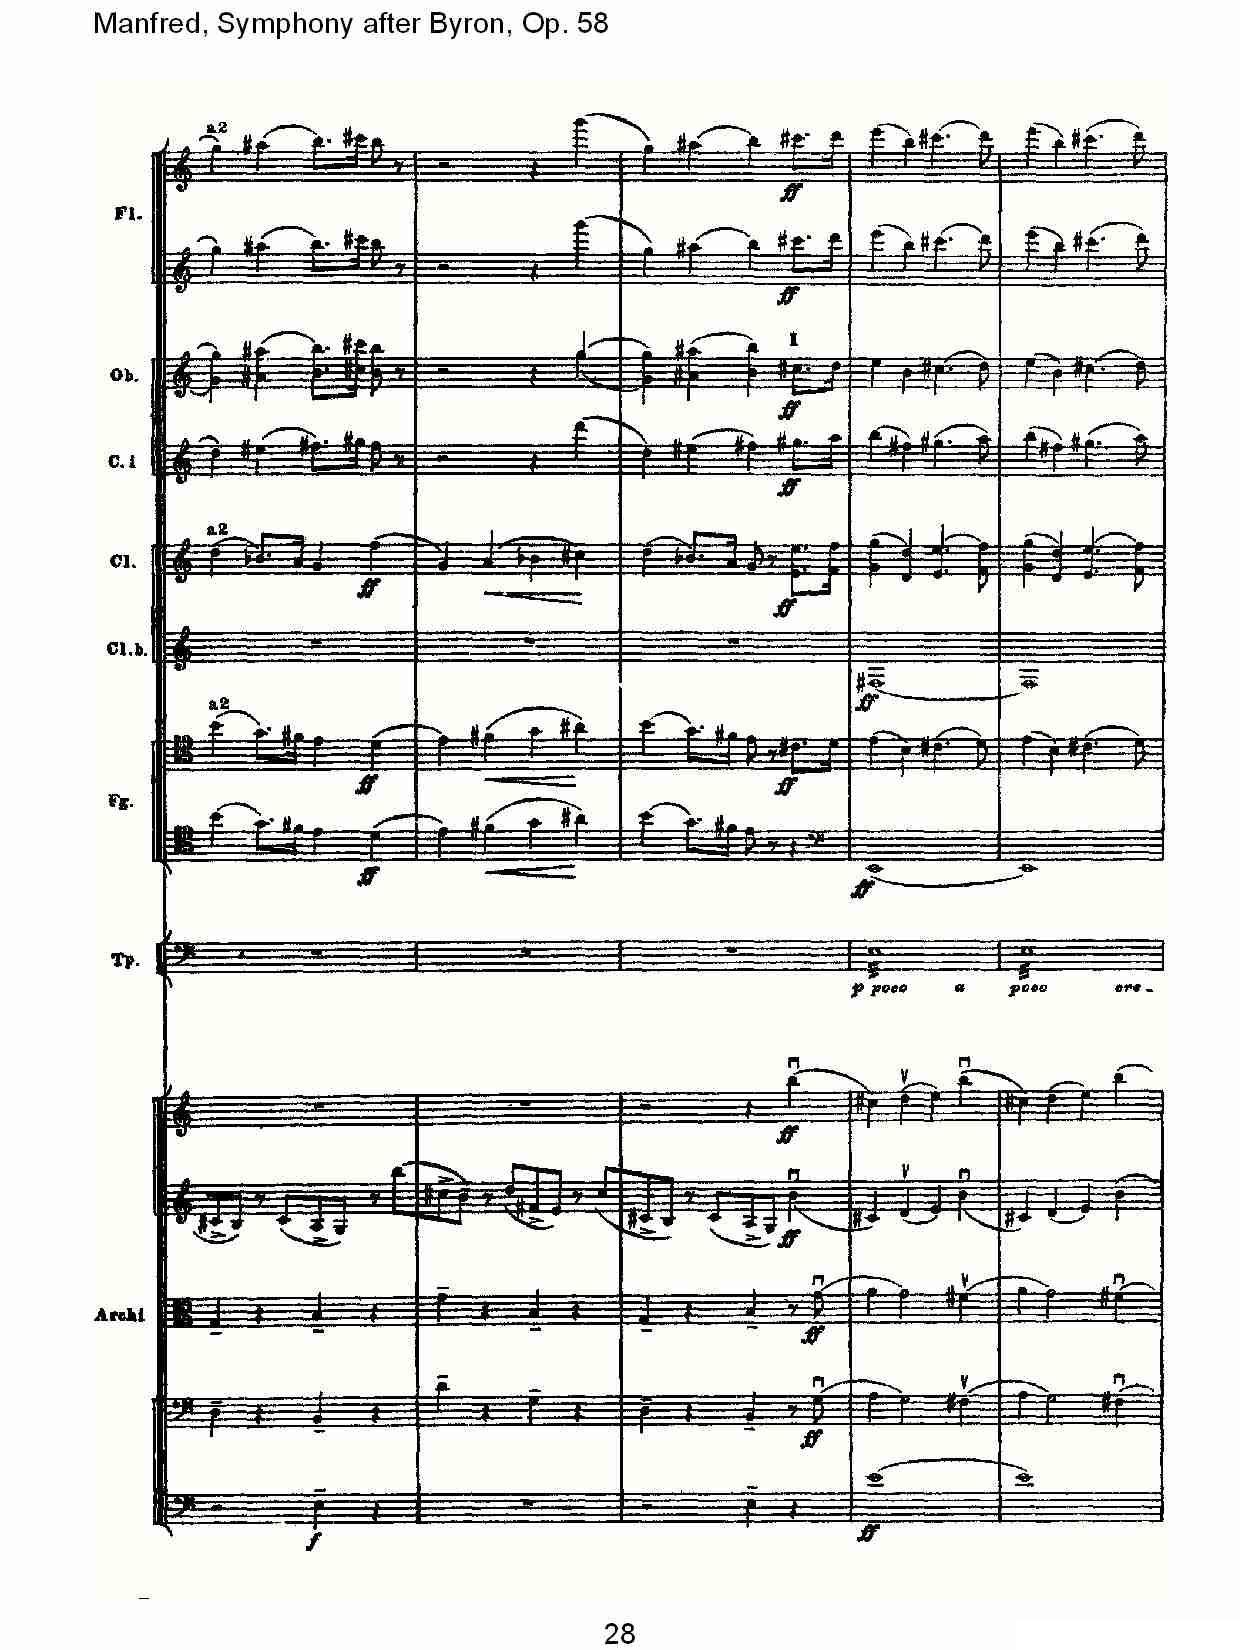 Manfred, Symphony after Byron, Op.58第一乐章（一）其它曲谱（图28）